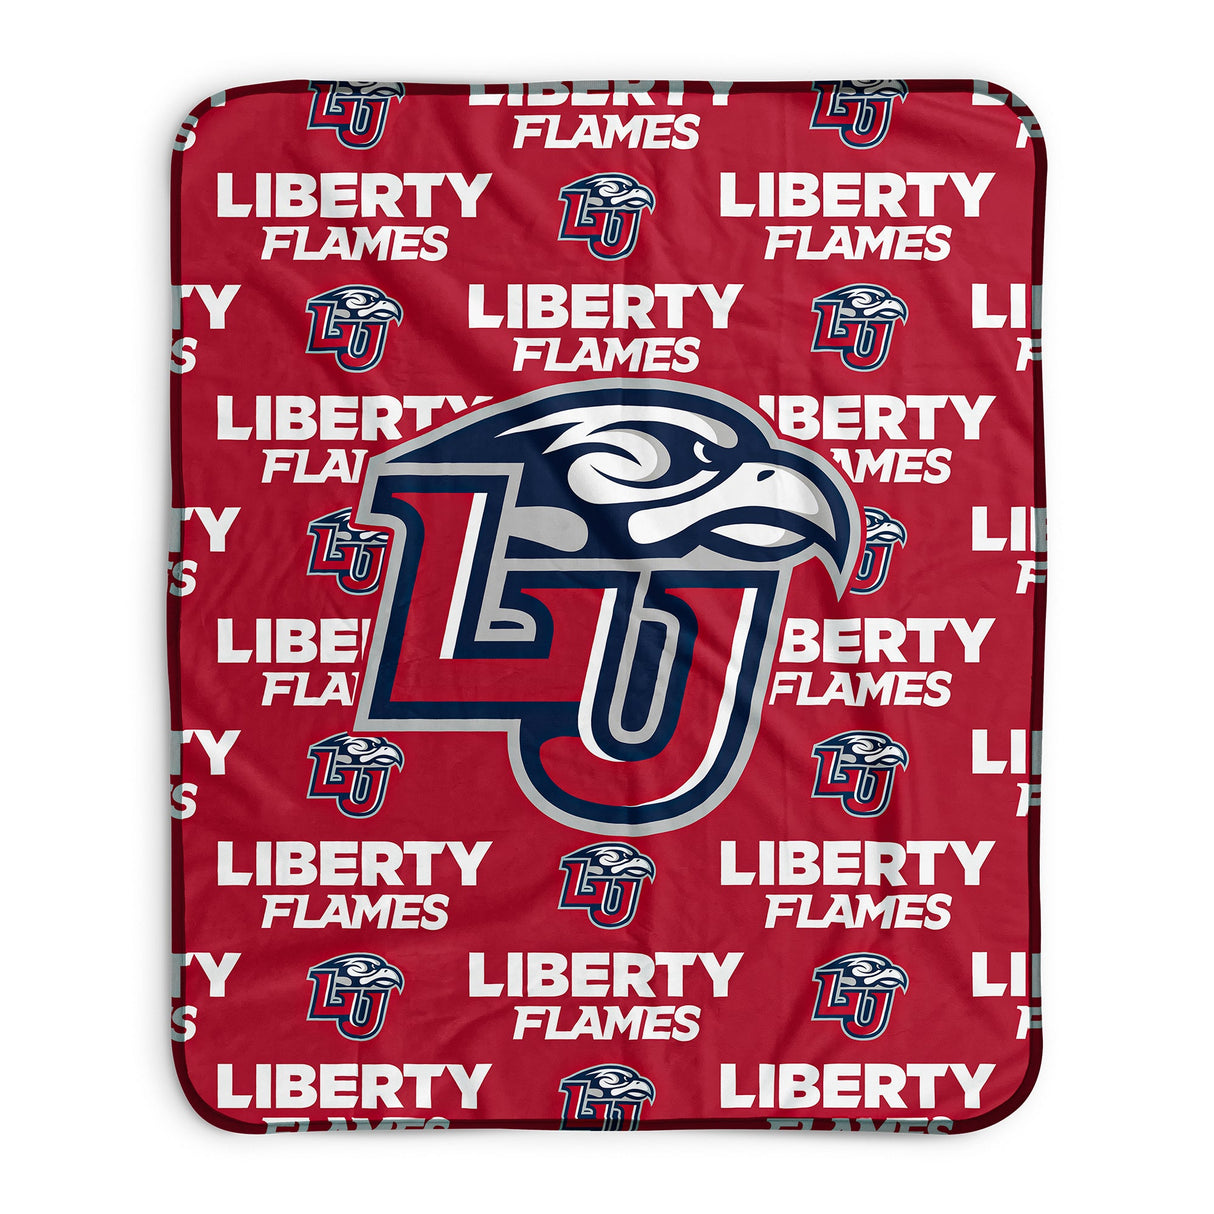 Pixsona Liberty Flames Repeat Pixel Fleece Blanket